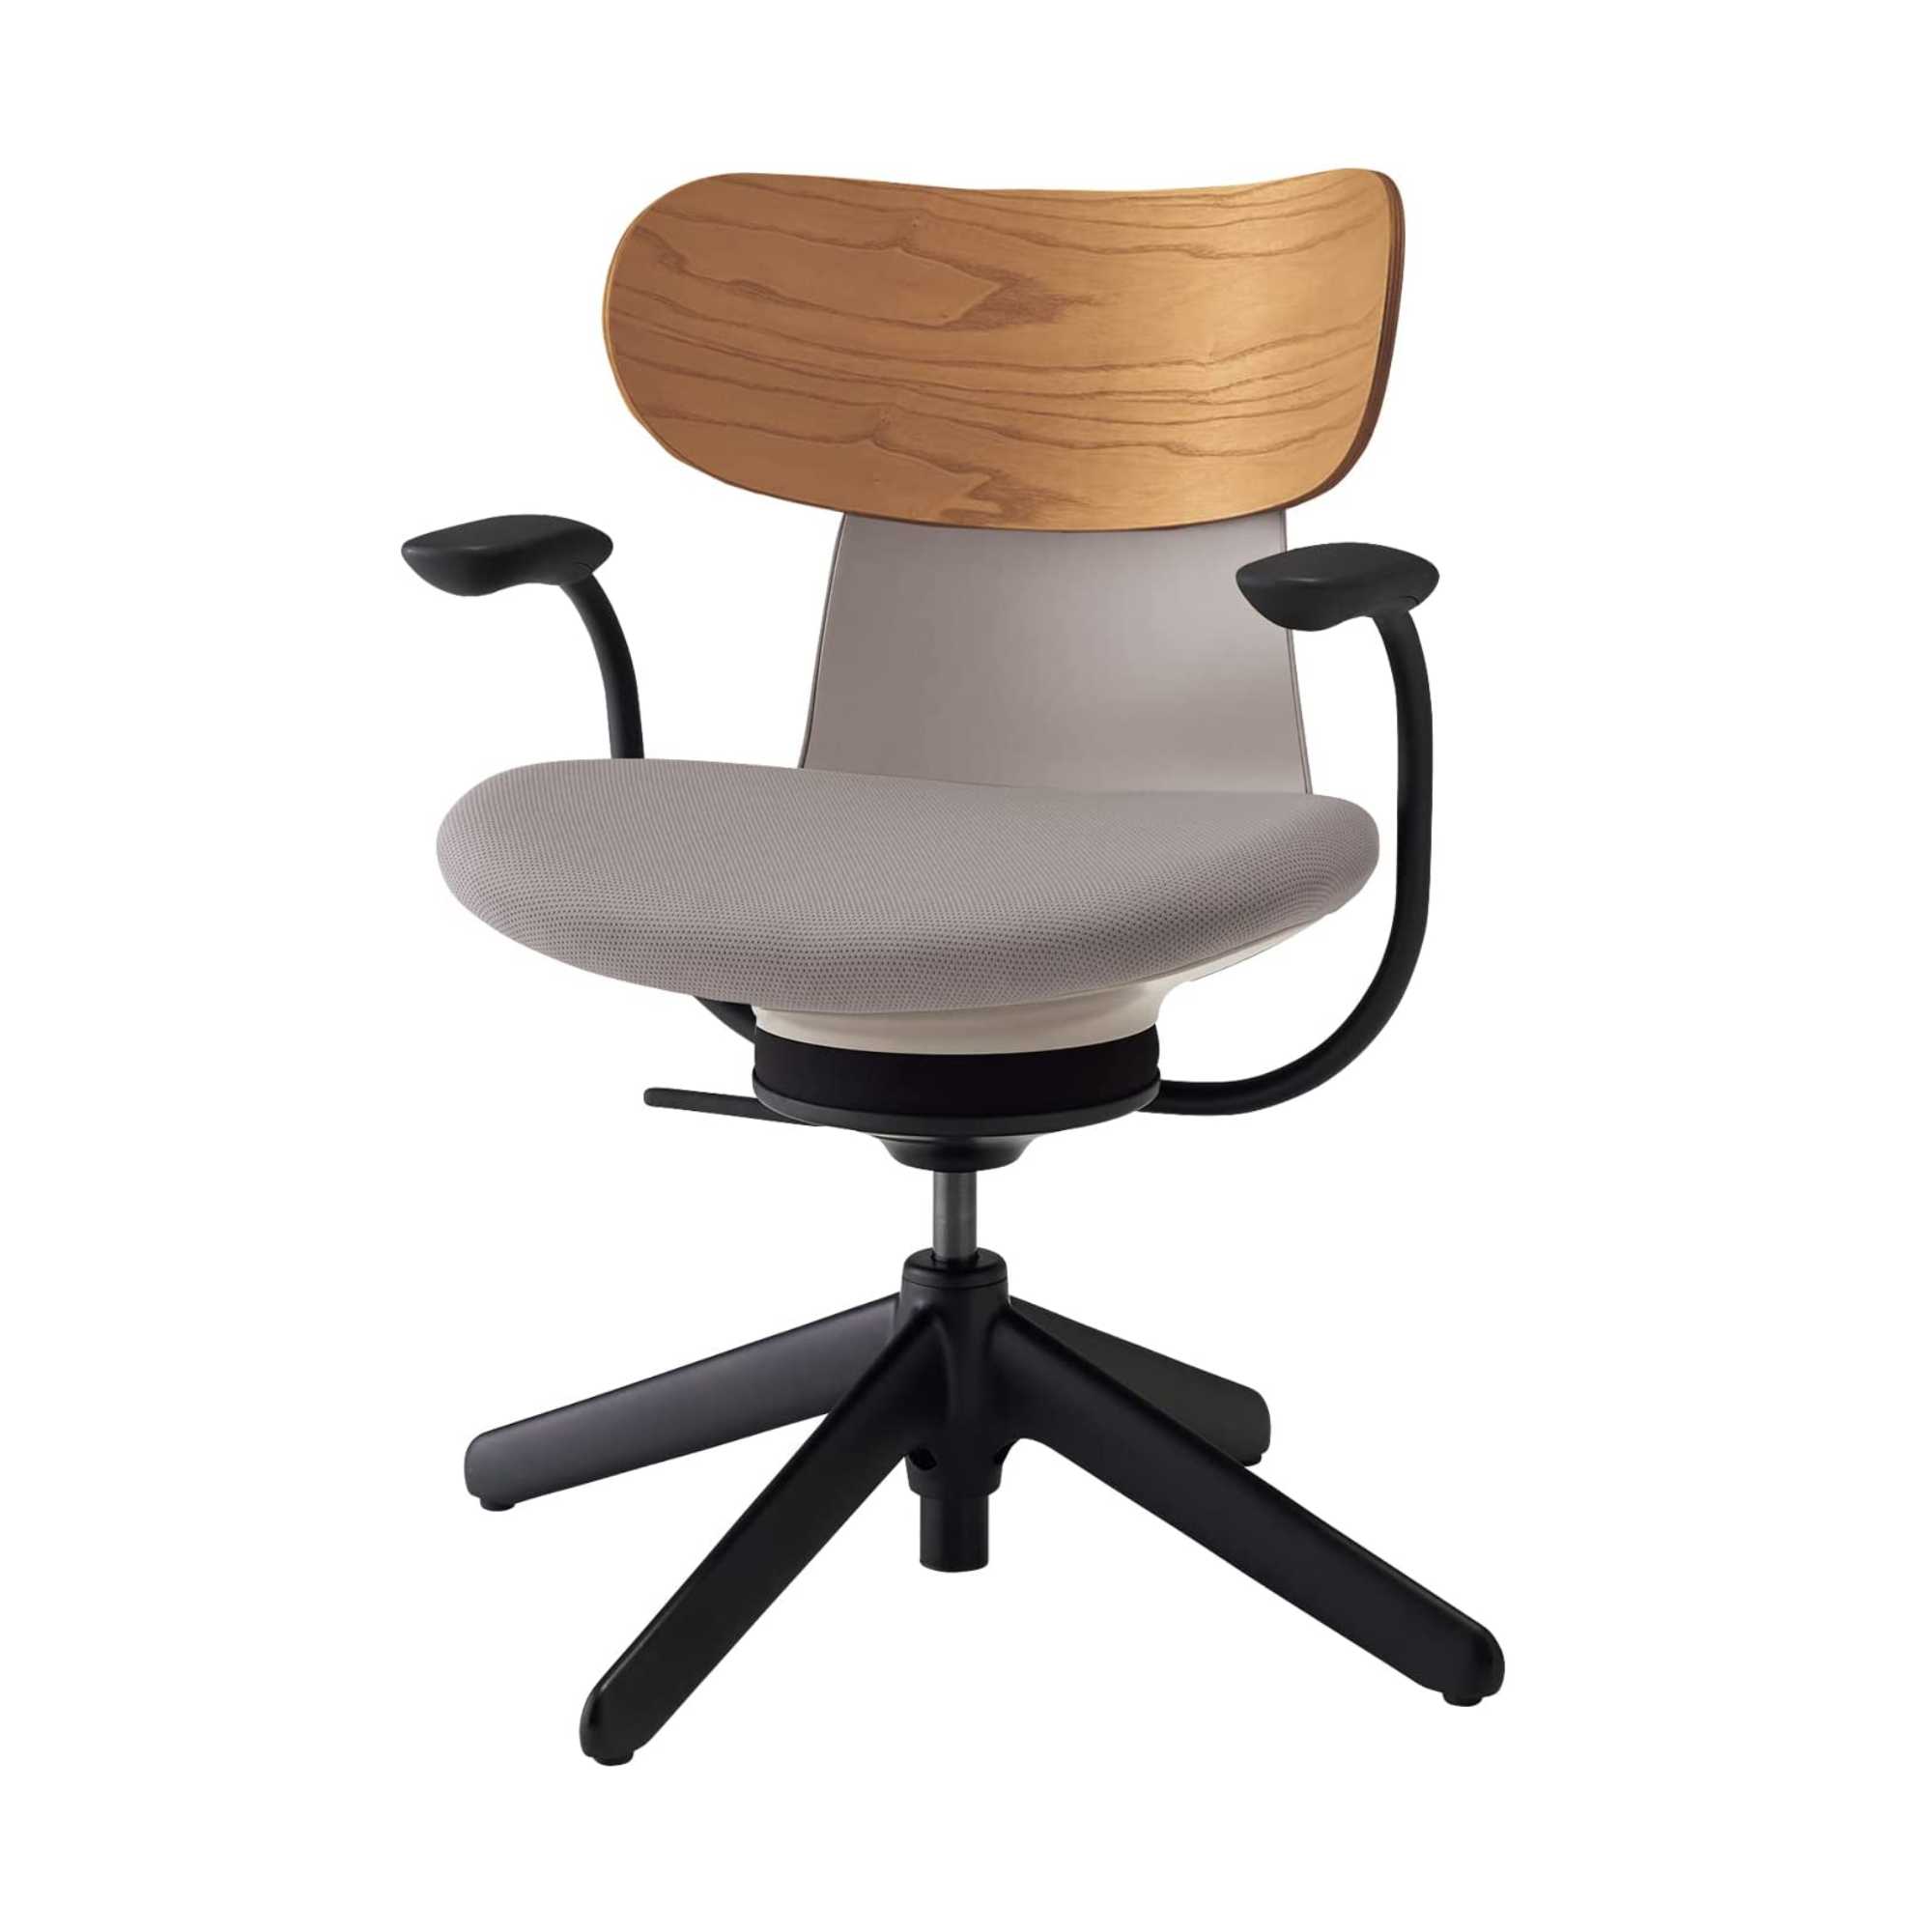 Kokuyo Inglife Office Chair Dark Plywood Back with Arm, grey